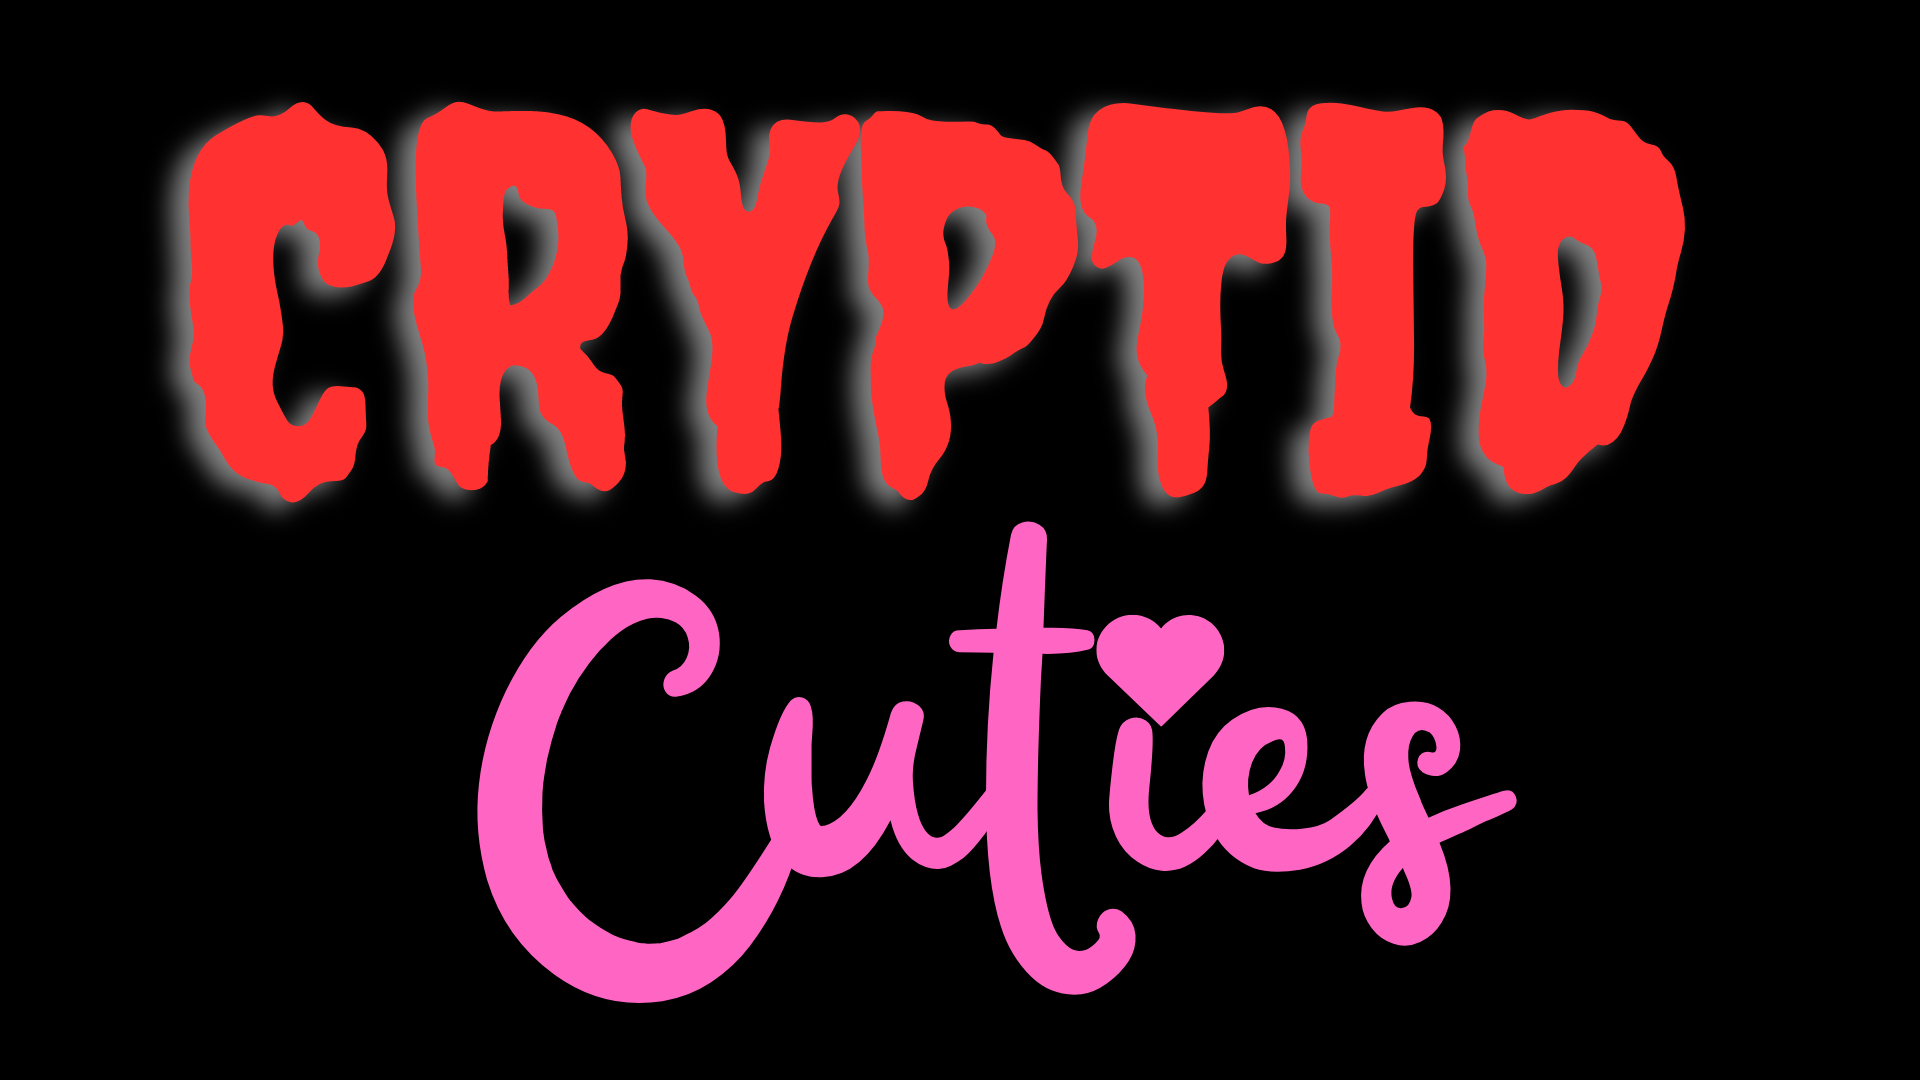 Cryptid Cuties